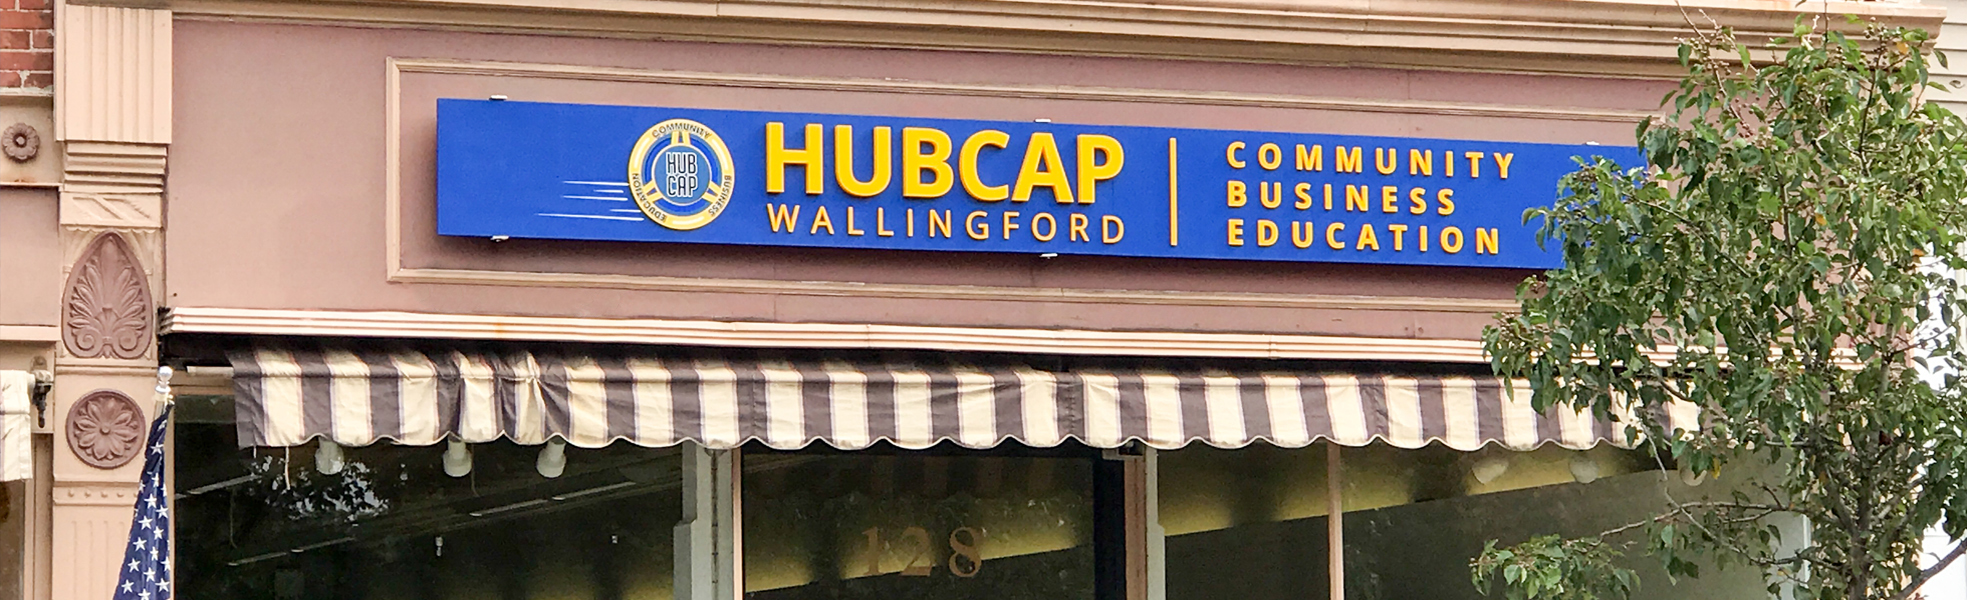 Hubcap Wallingford